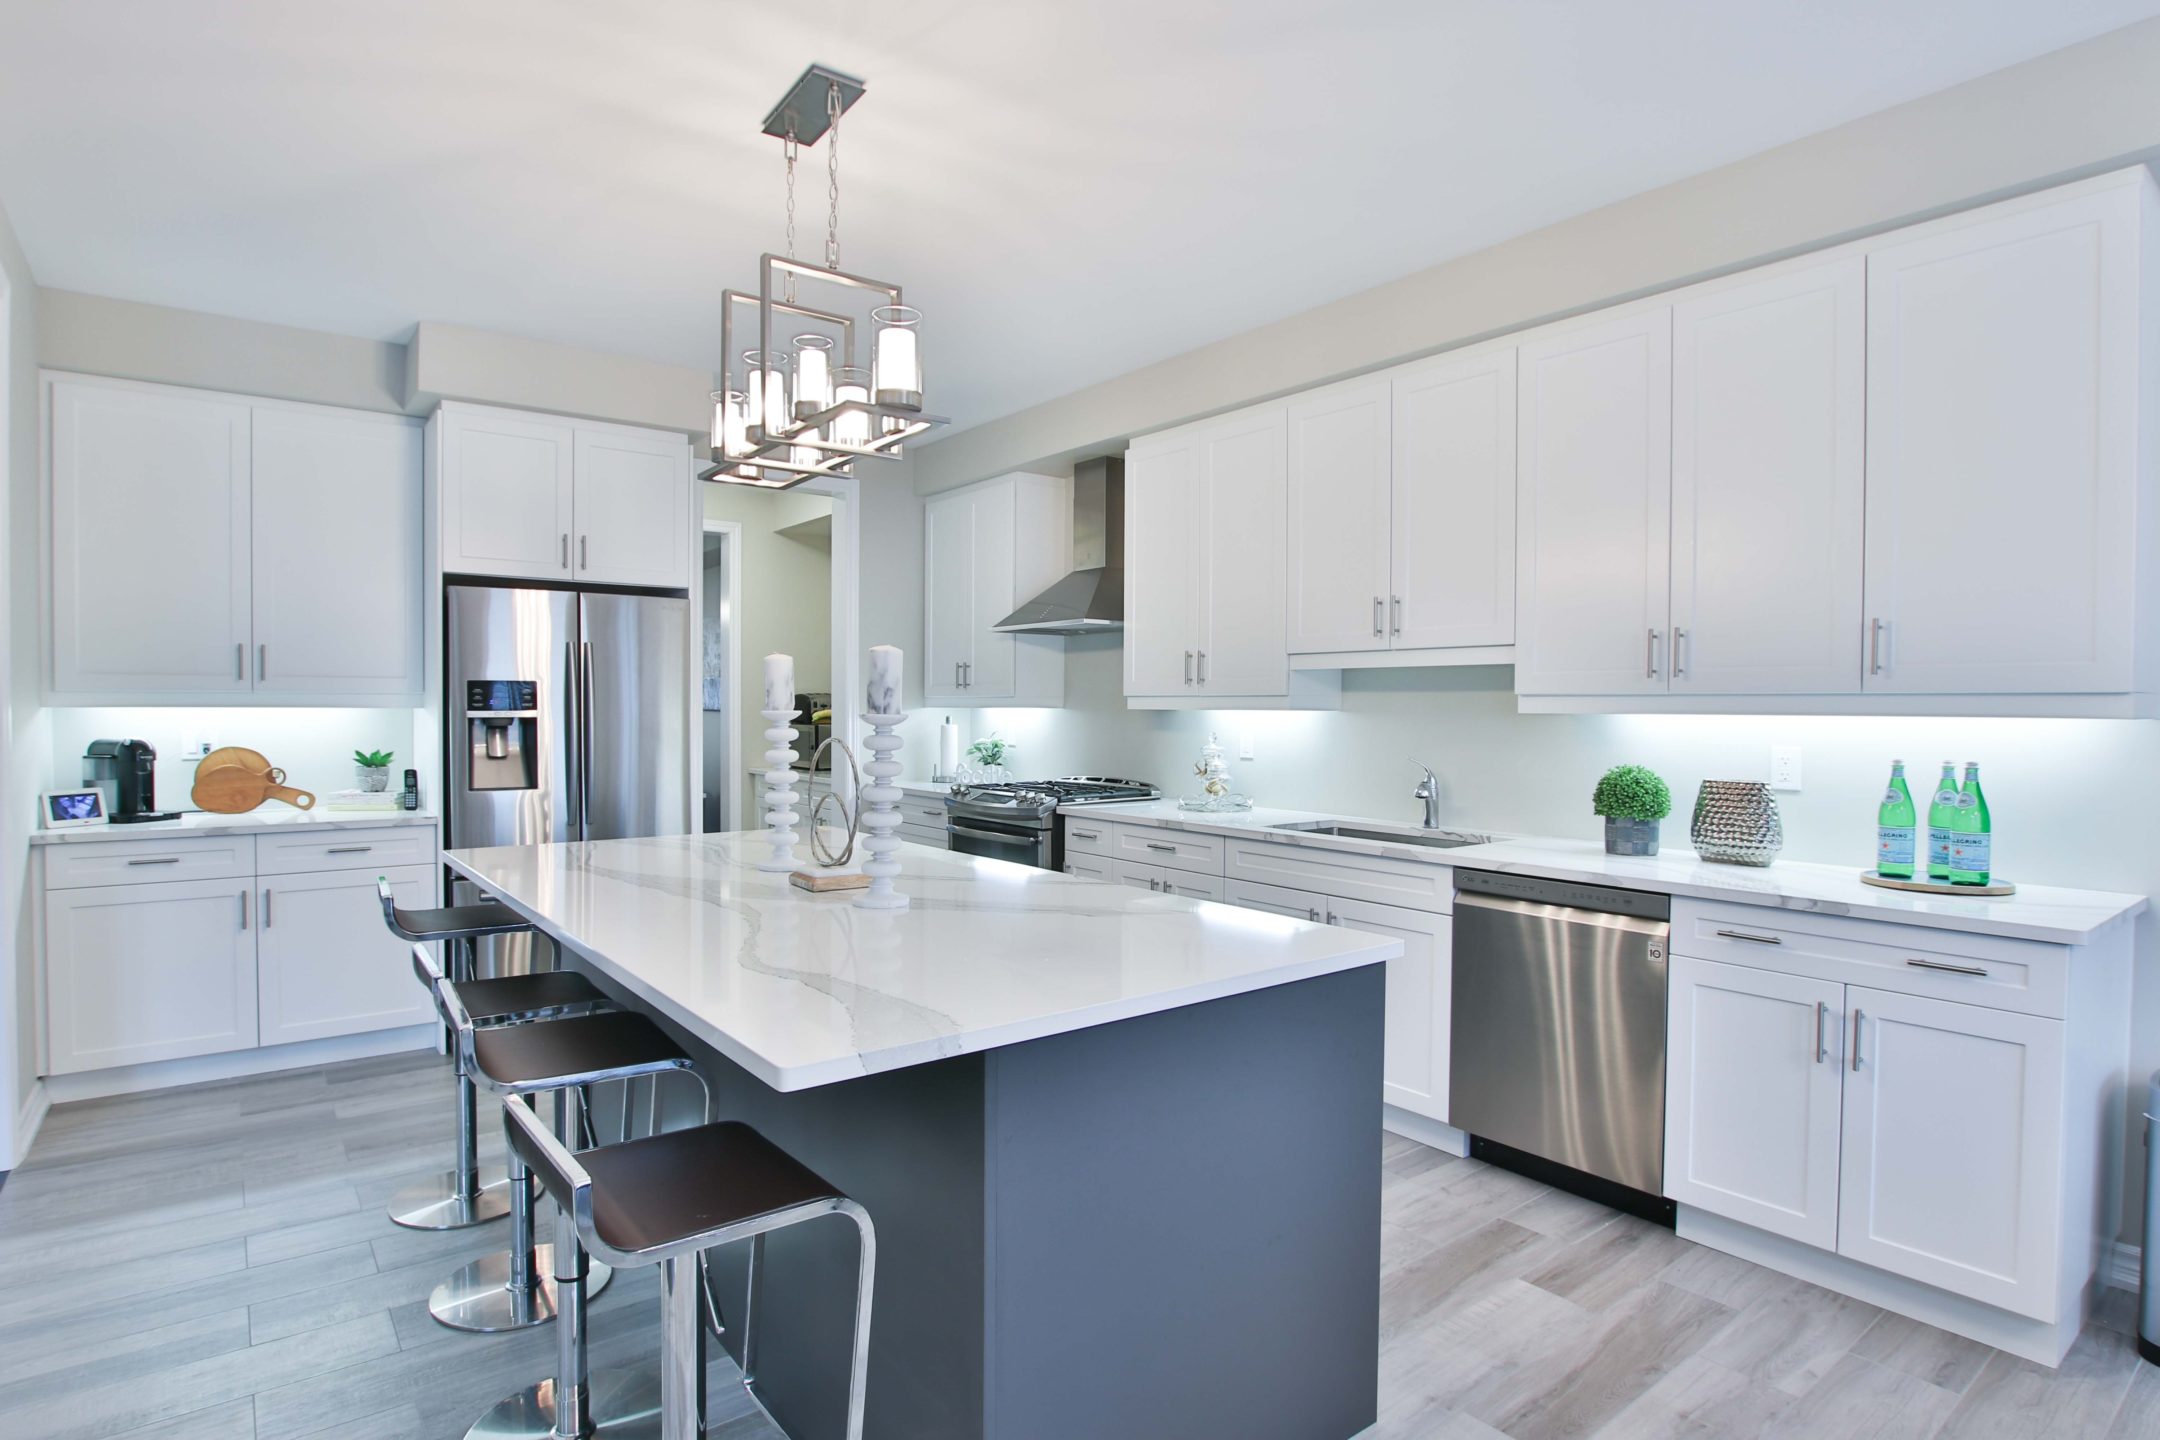 Kitchen Design Ideas to Increase Home Value